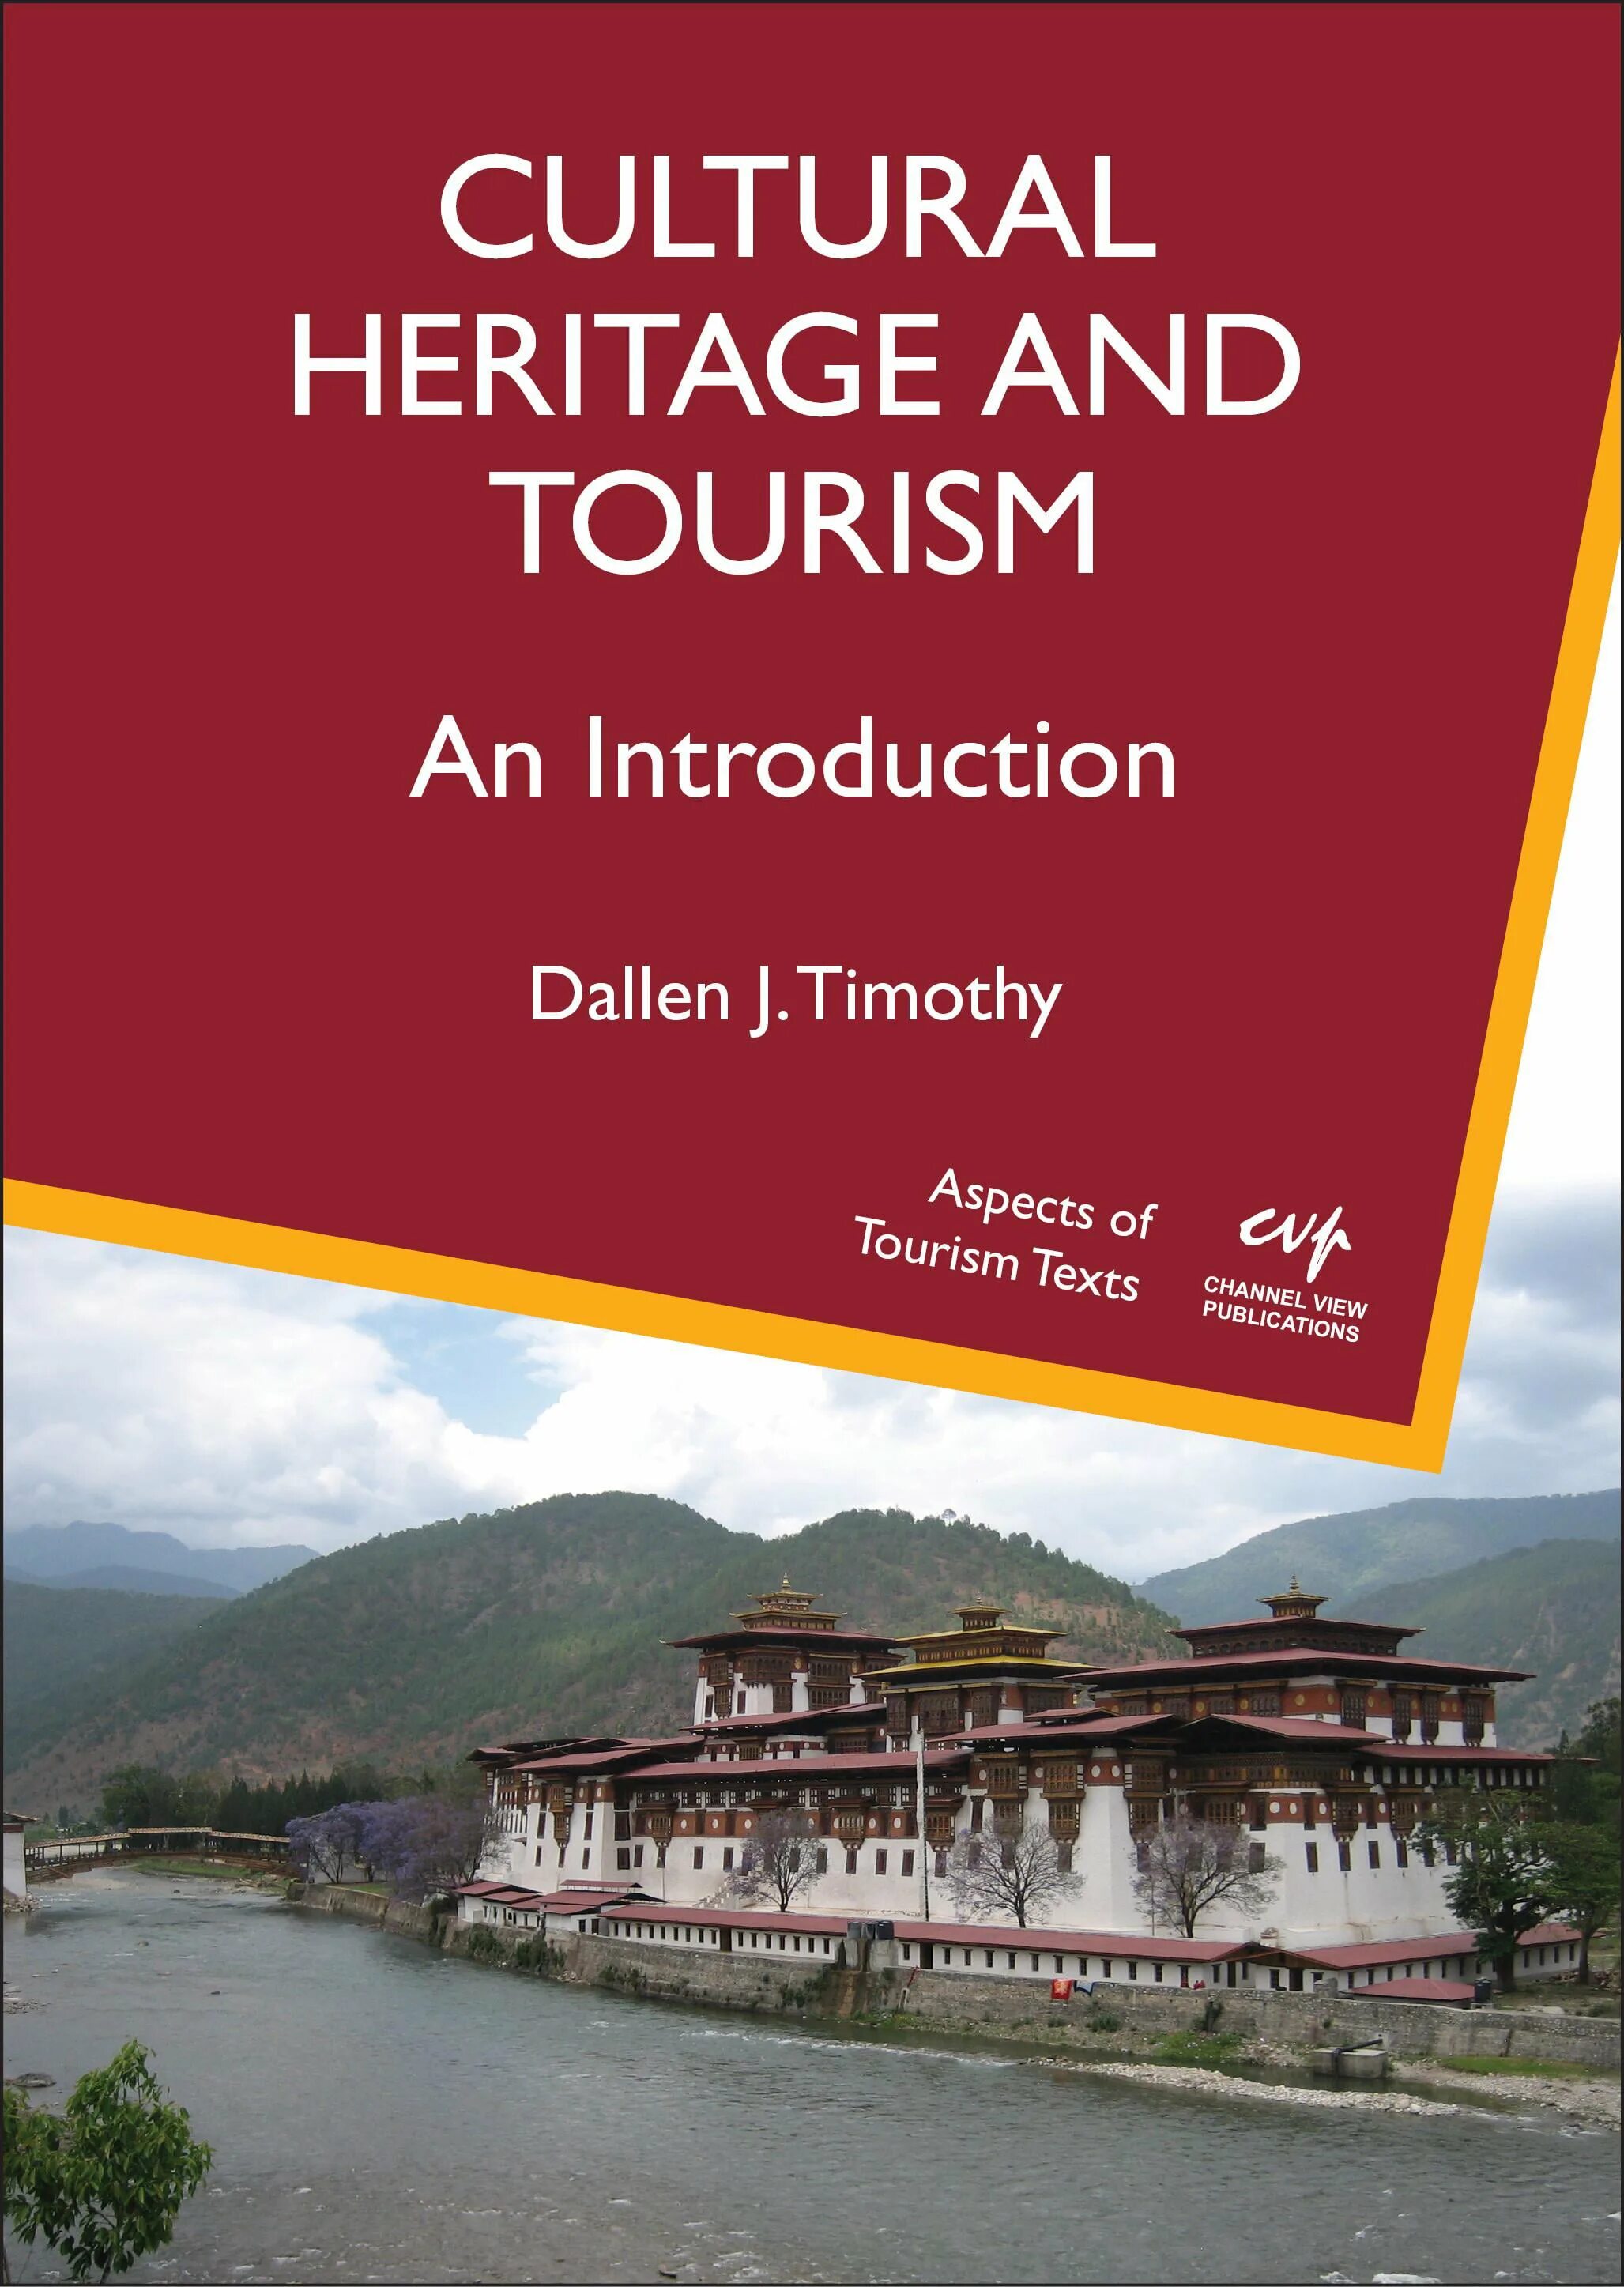 Tourism book. Heritage Tourism. World Tourism учебник. Cultural Heritage. Cover book Tourism.